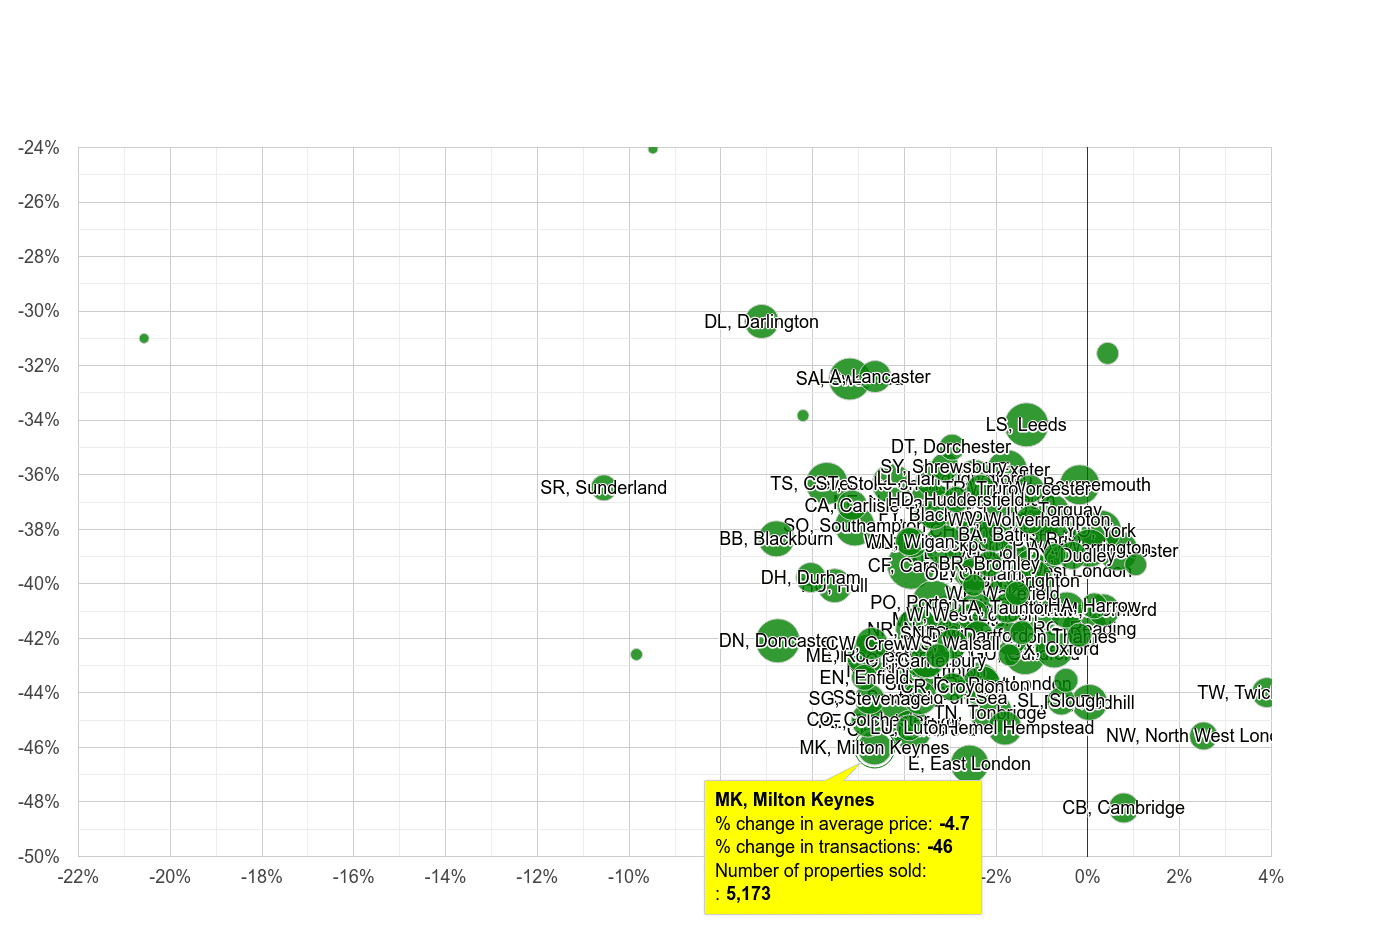 Milton Keynes property price and sales volume change relative to other postcode areas